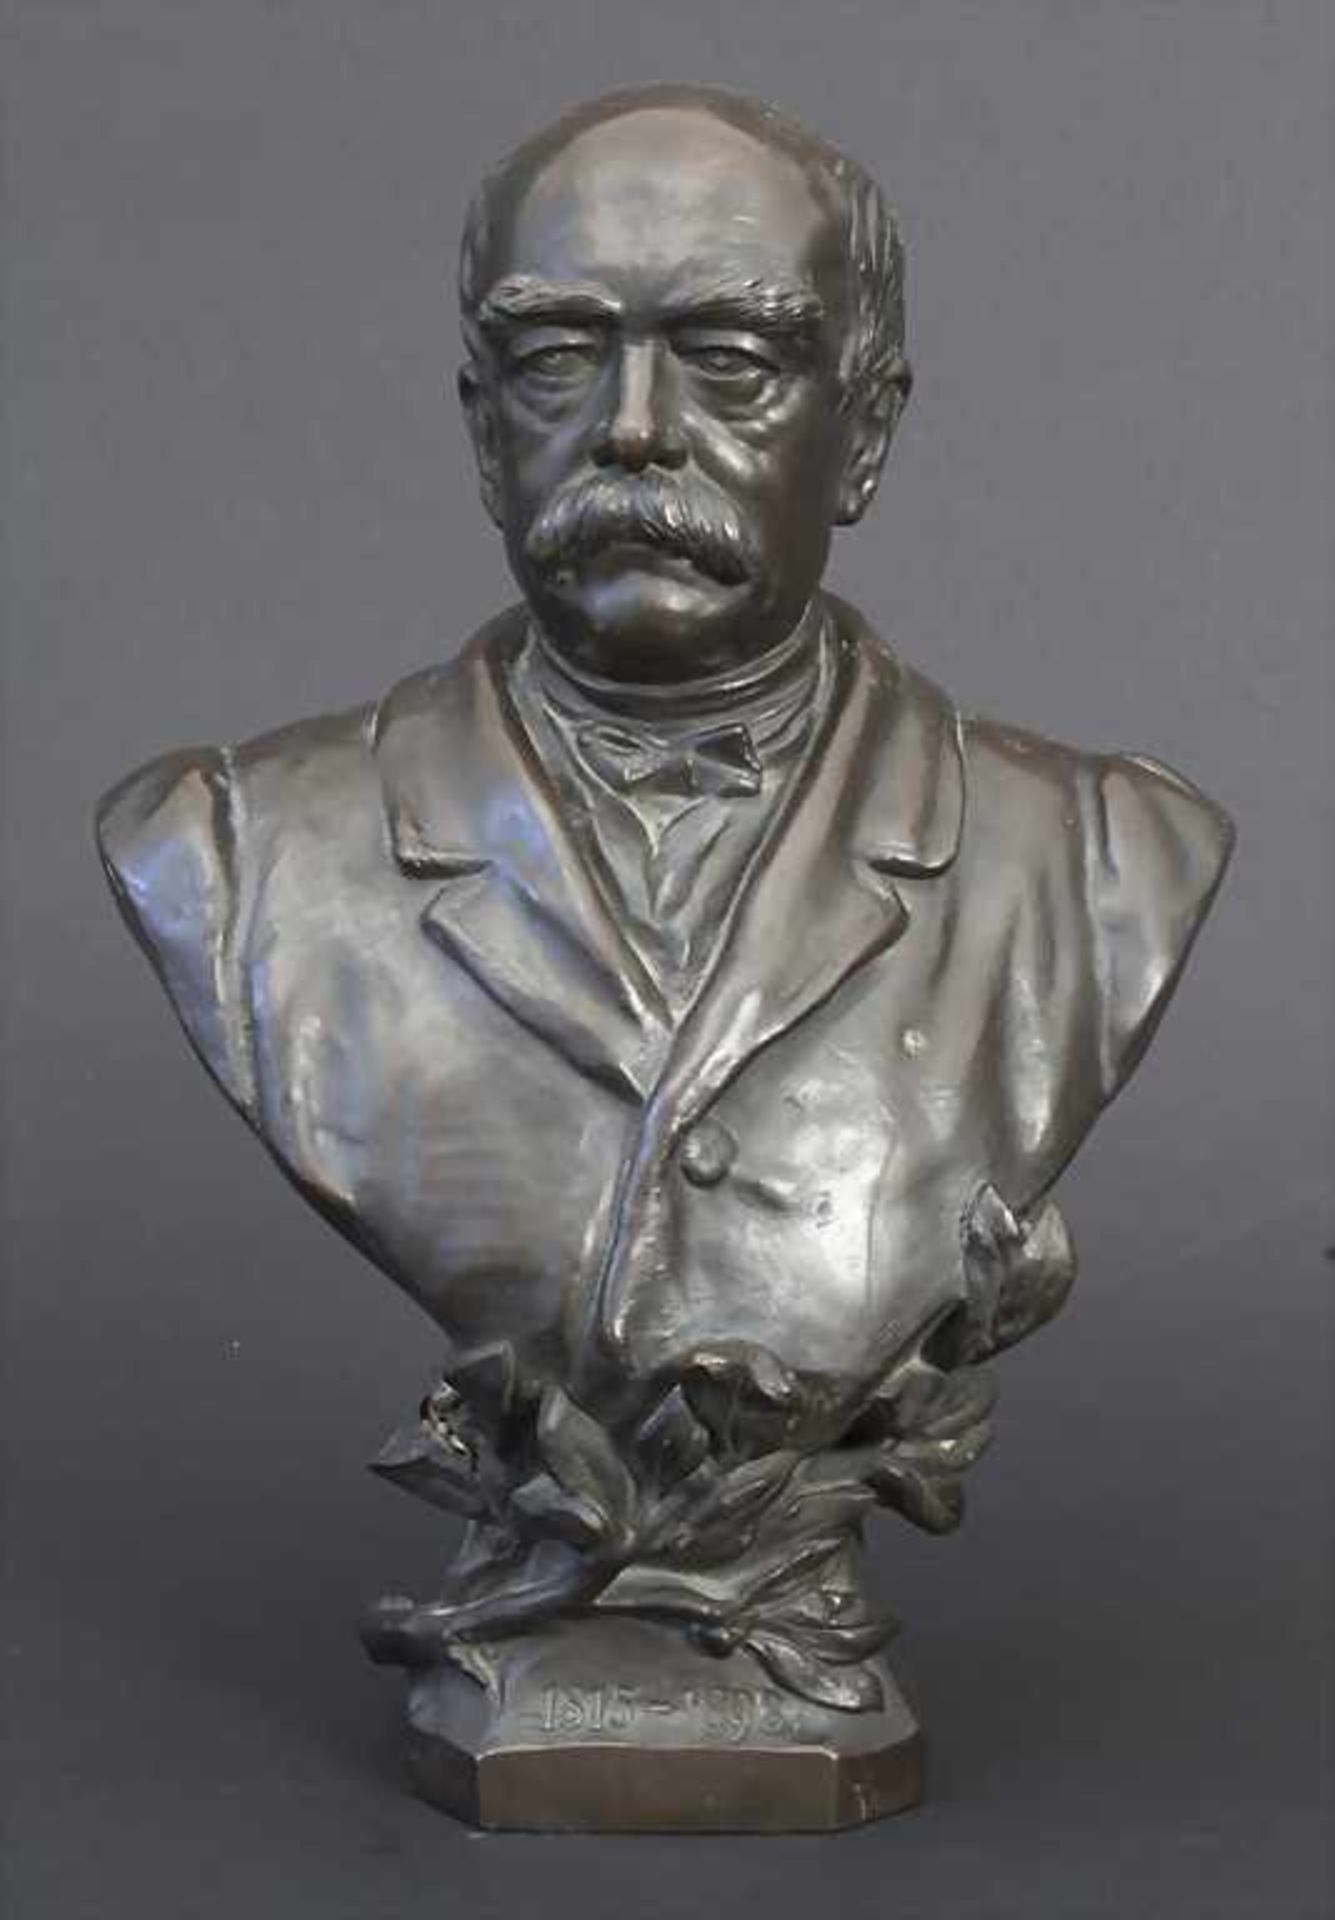 Bismarck Büste / A Bismarck bust, C. Krauß, um 1900Material: Kupfer patiniert,Signatur: C. Krauß (